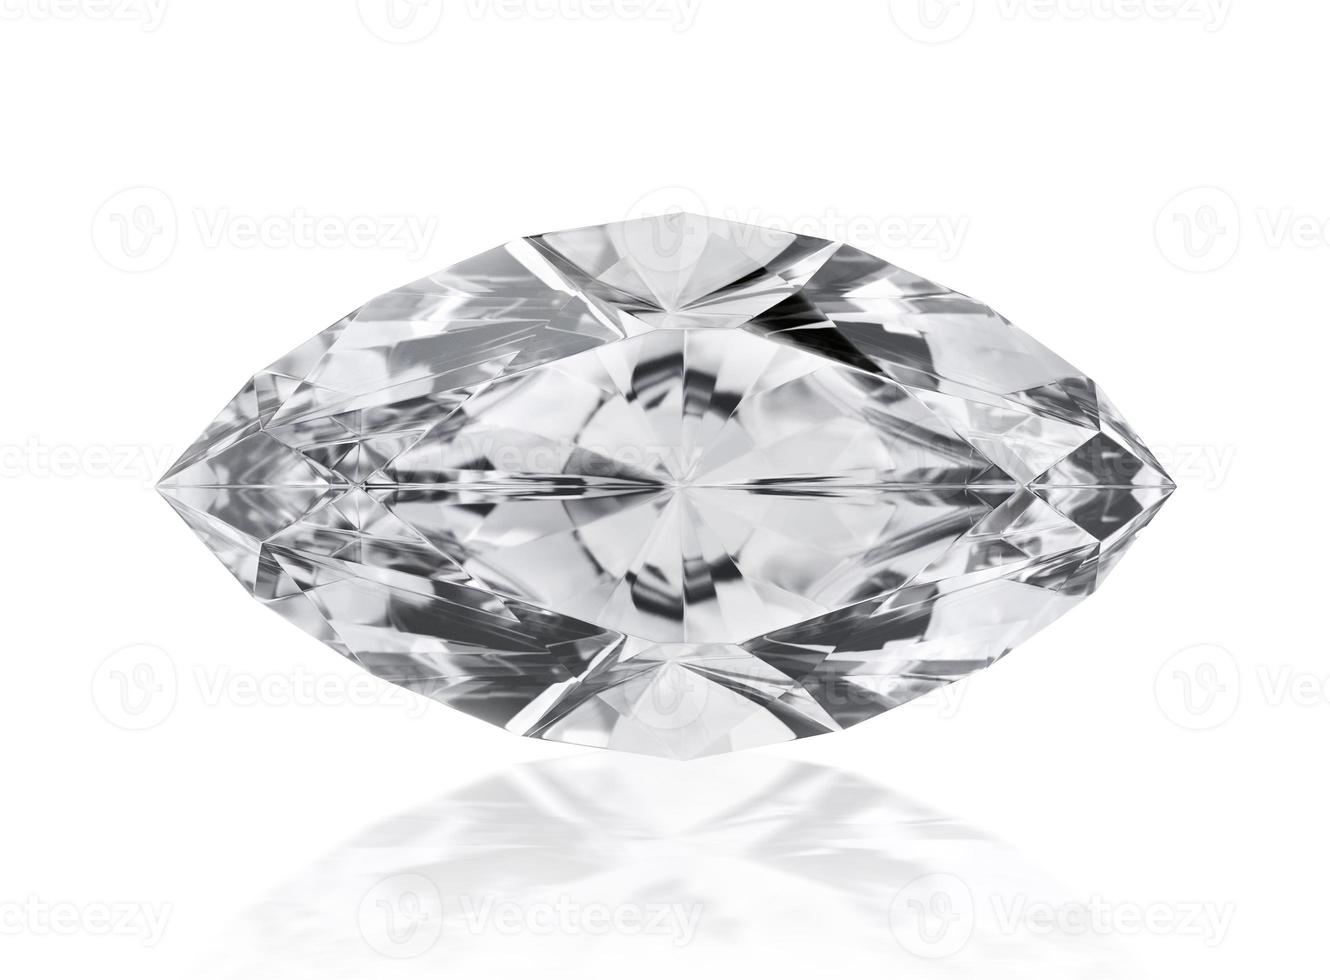 Dazzling diamond on white background photo